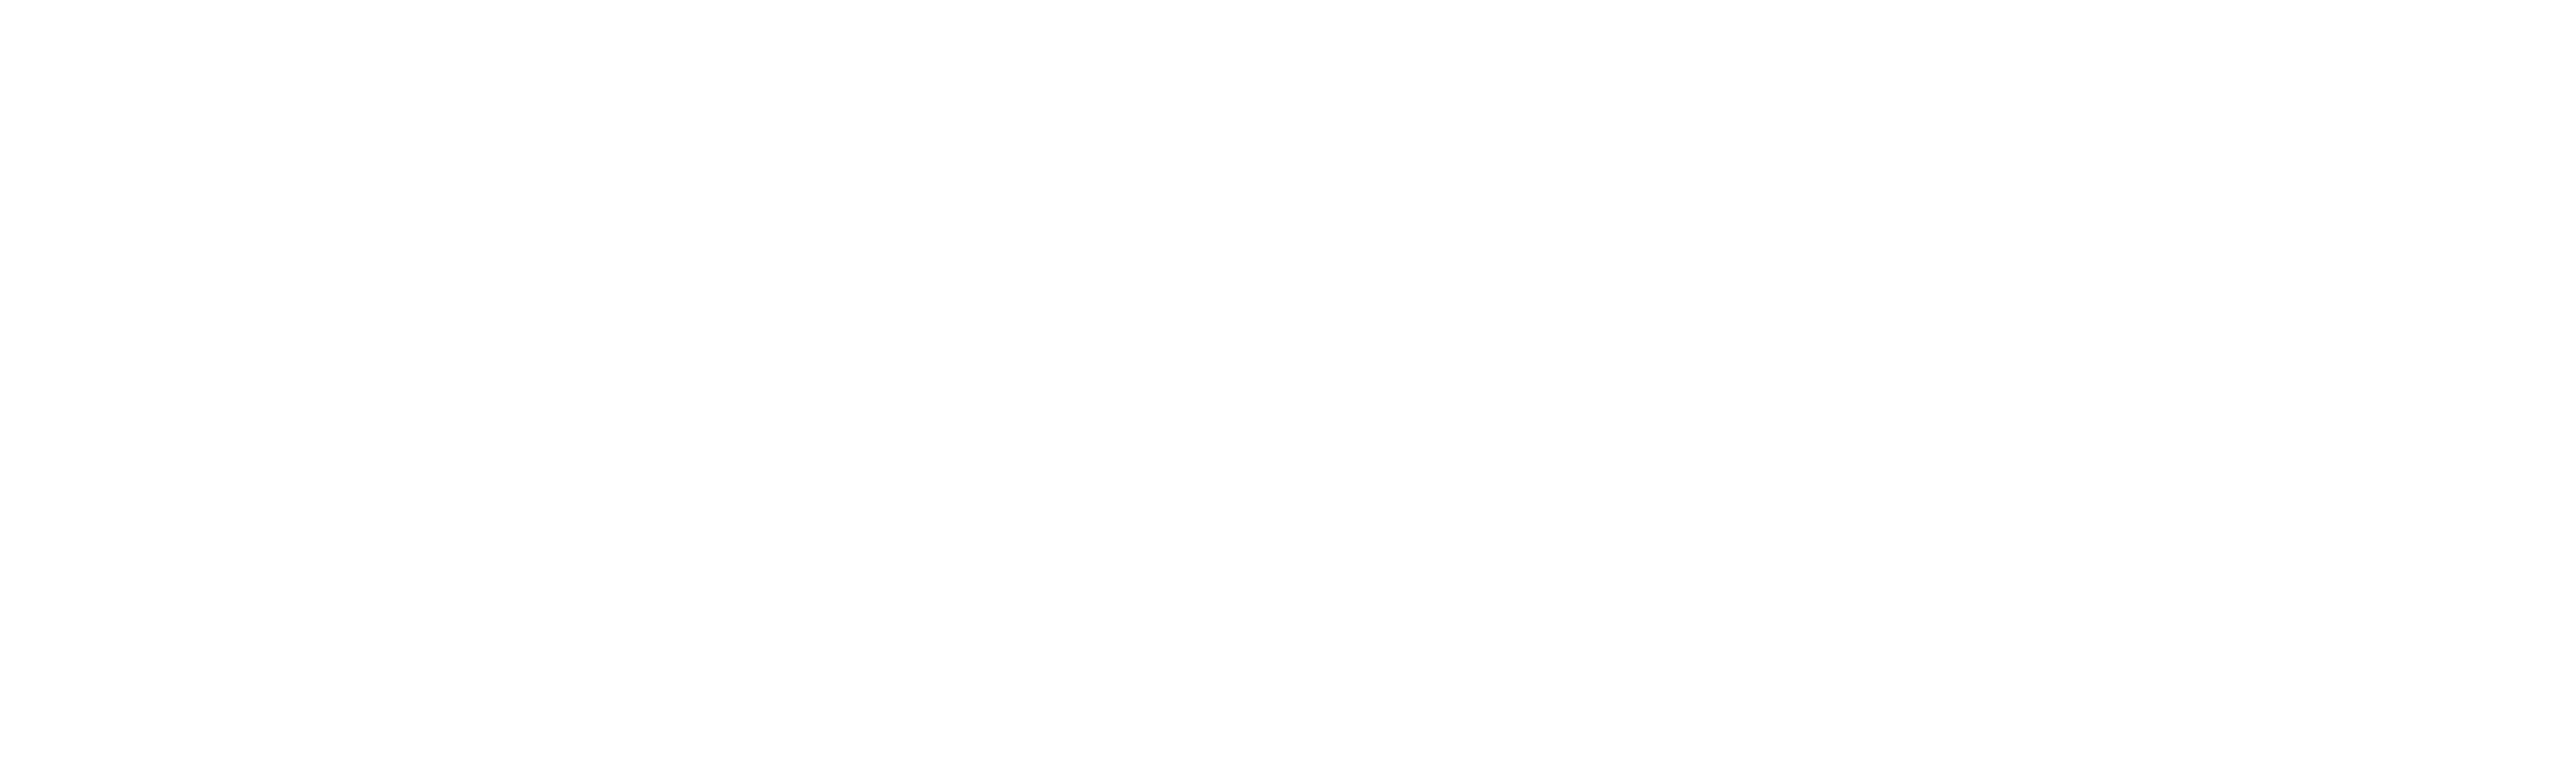 cegedim healthcare solution_logo white_-01